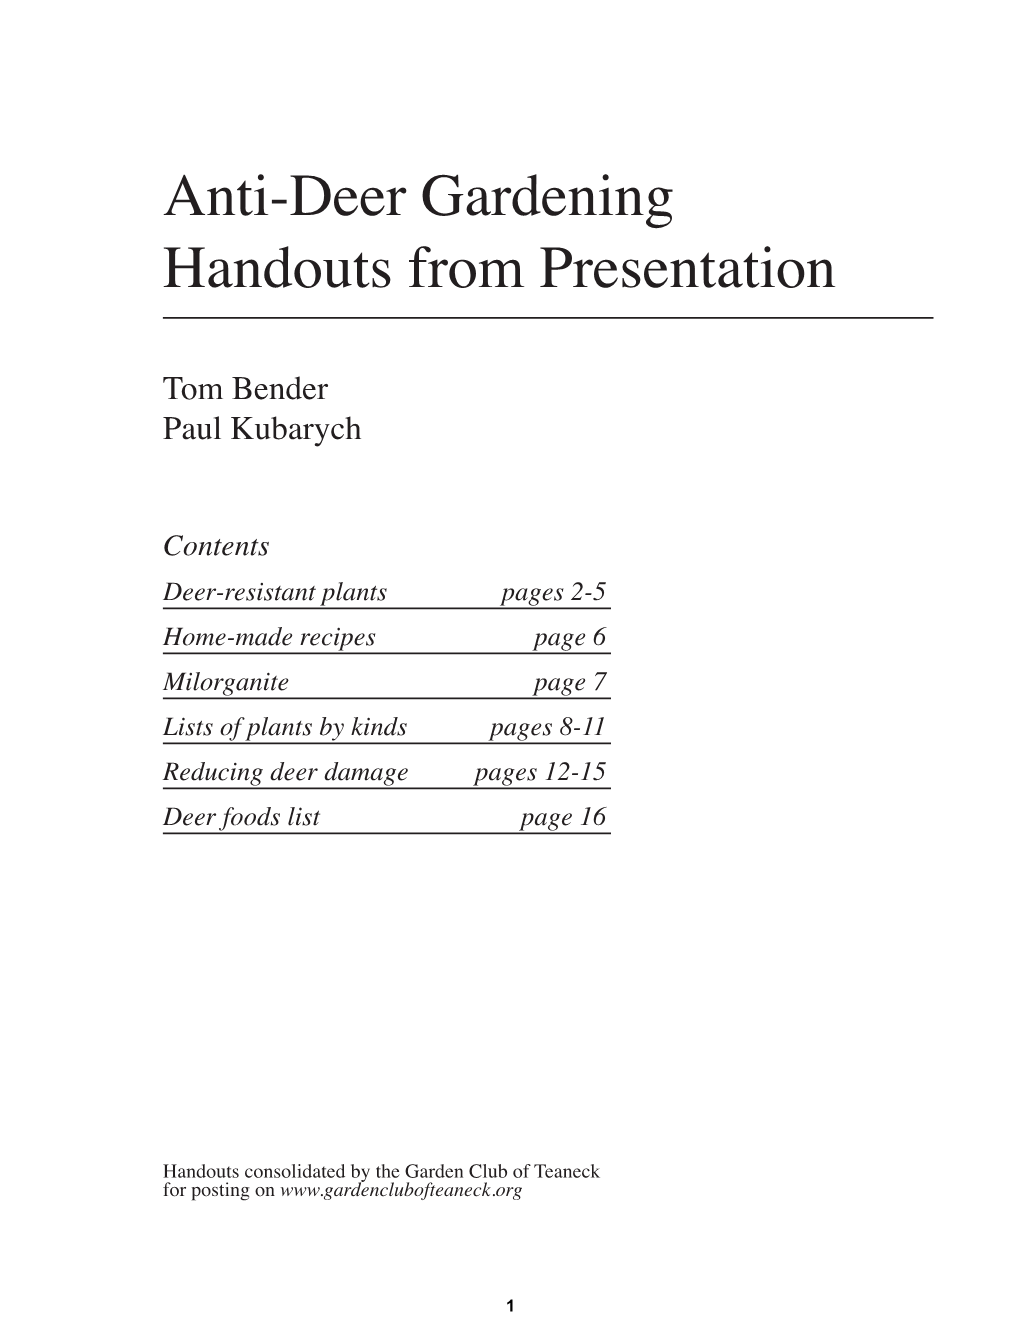 Anti-Deer Gardening Handouts from Presentation